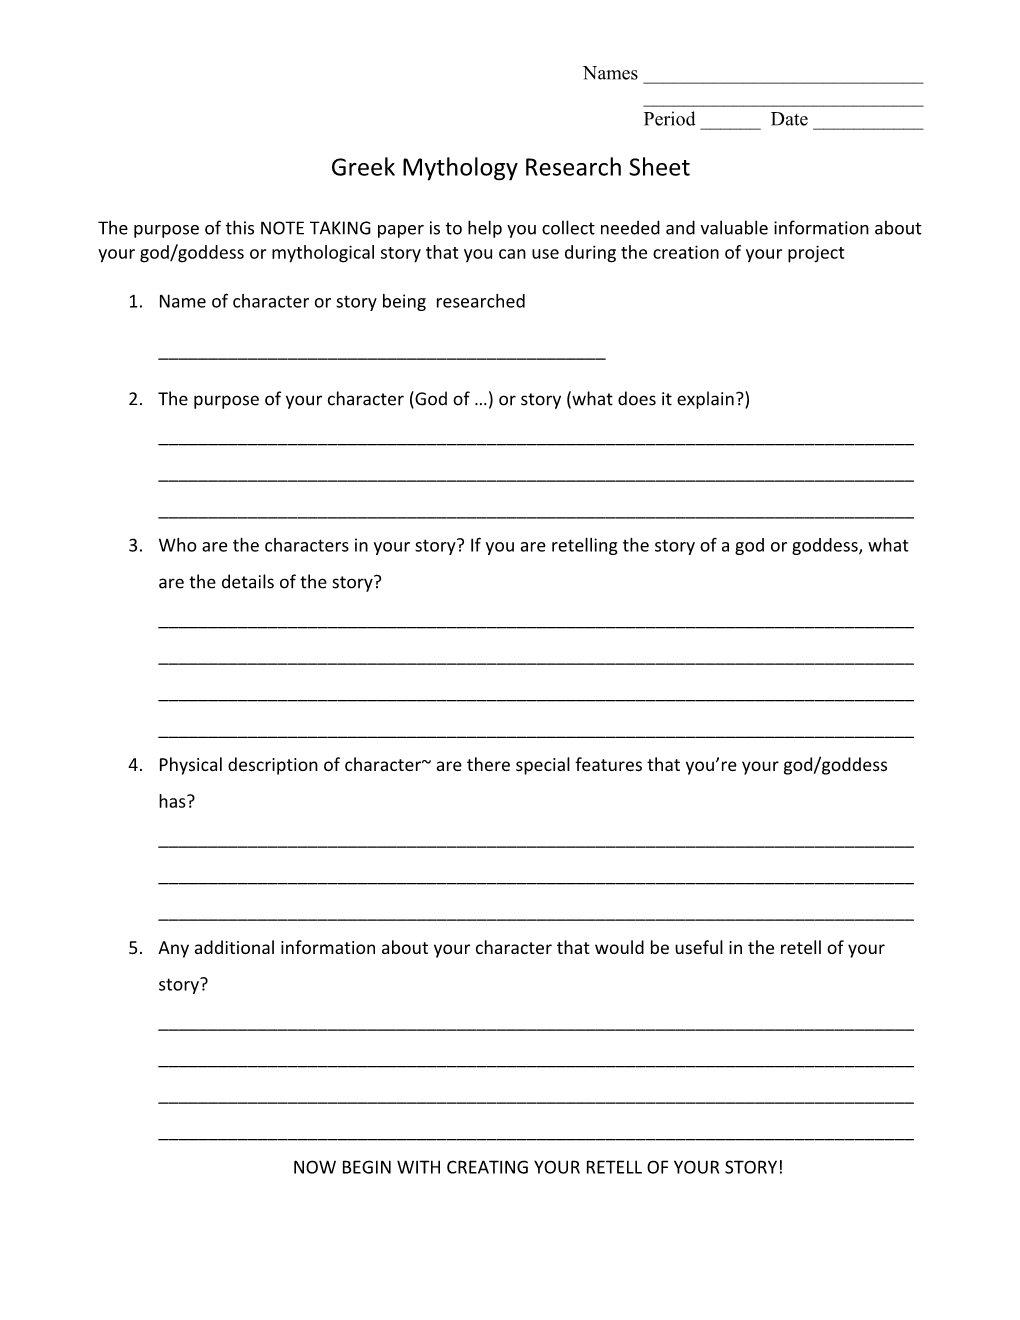 Greek Mythology Research Sheet